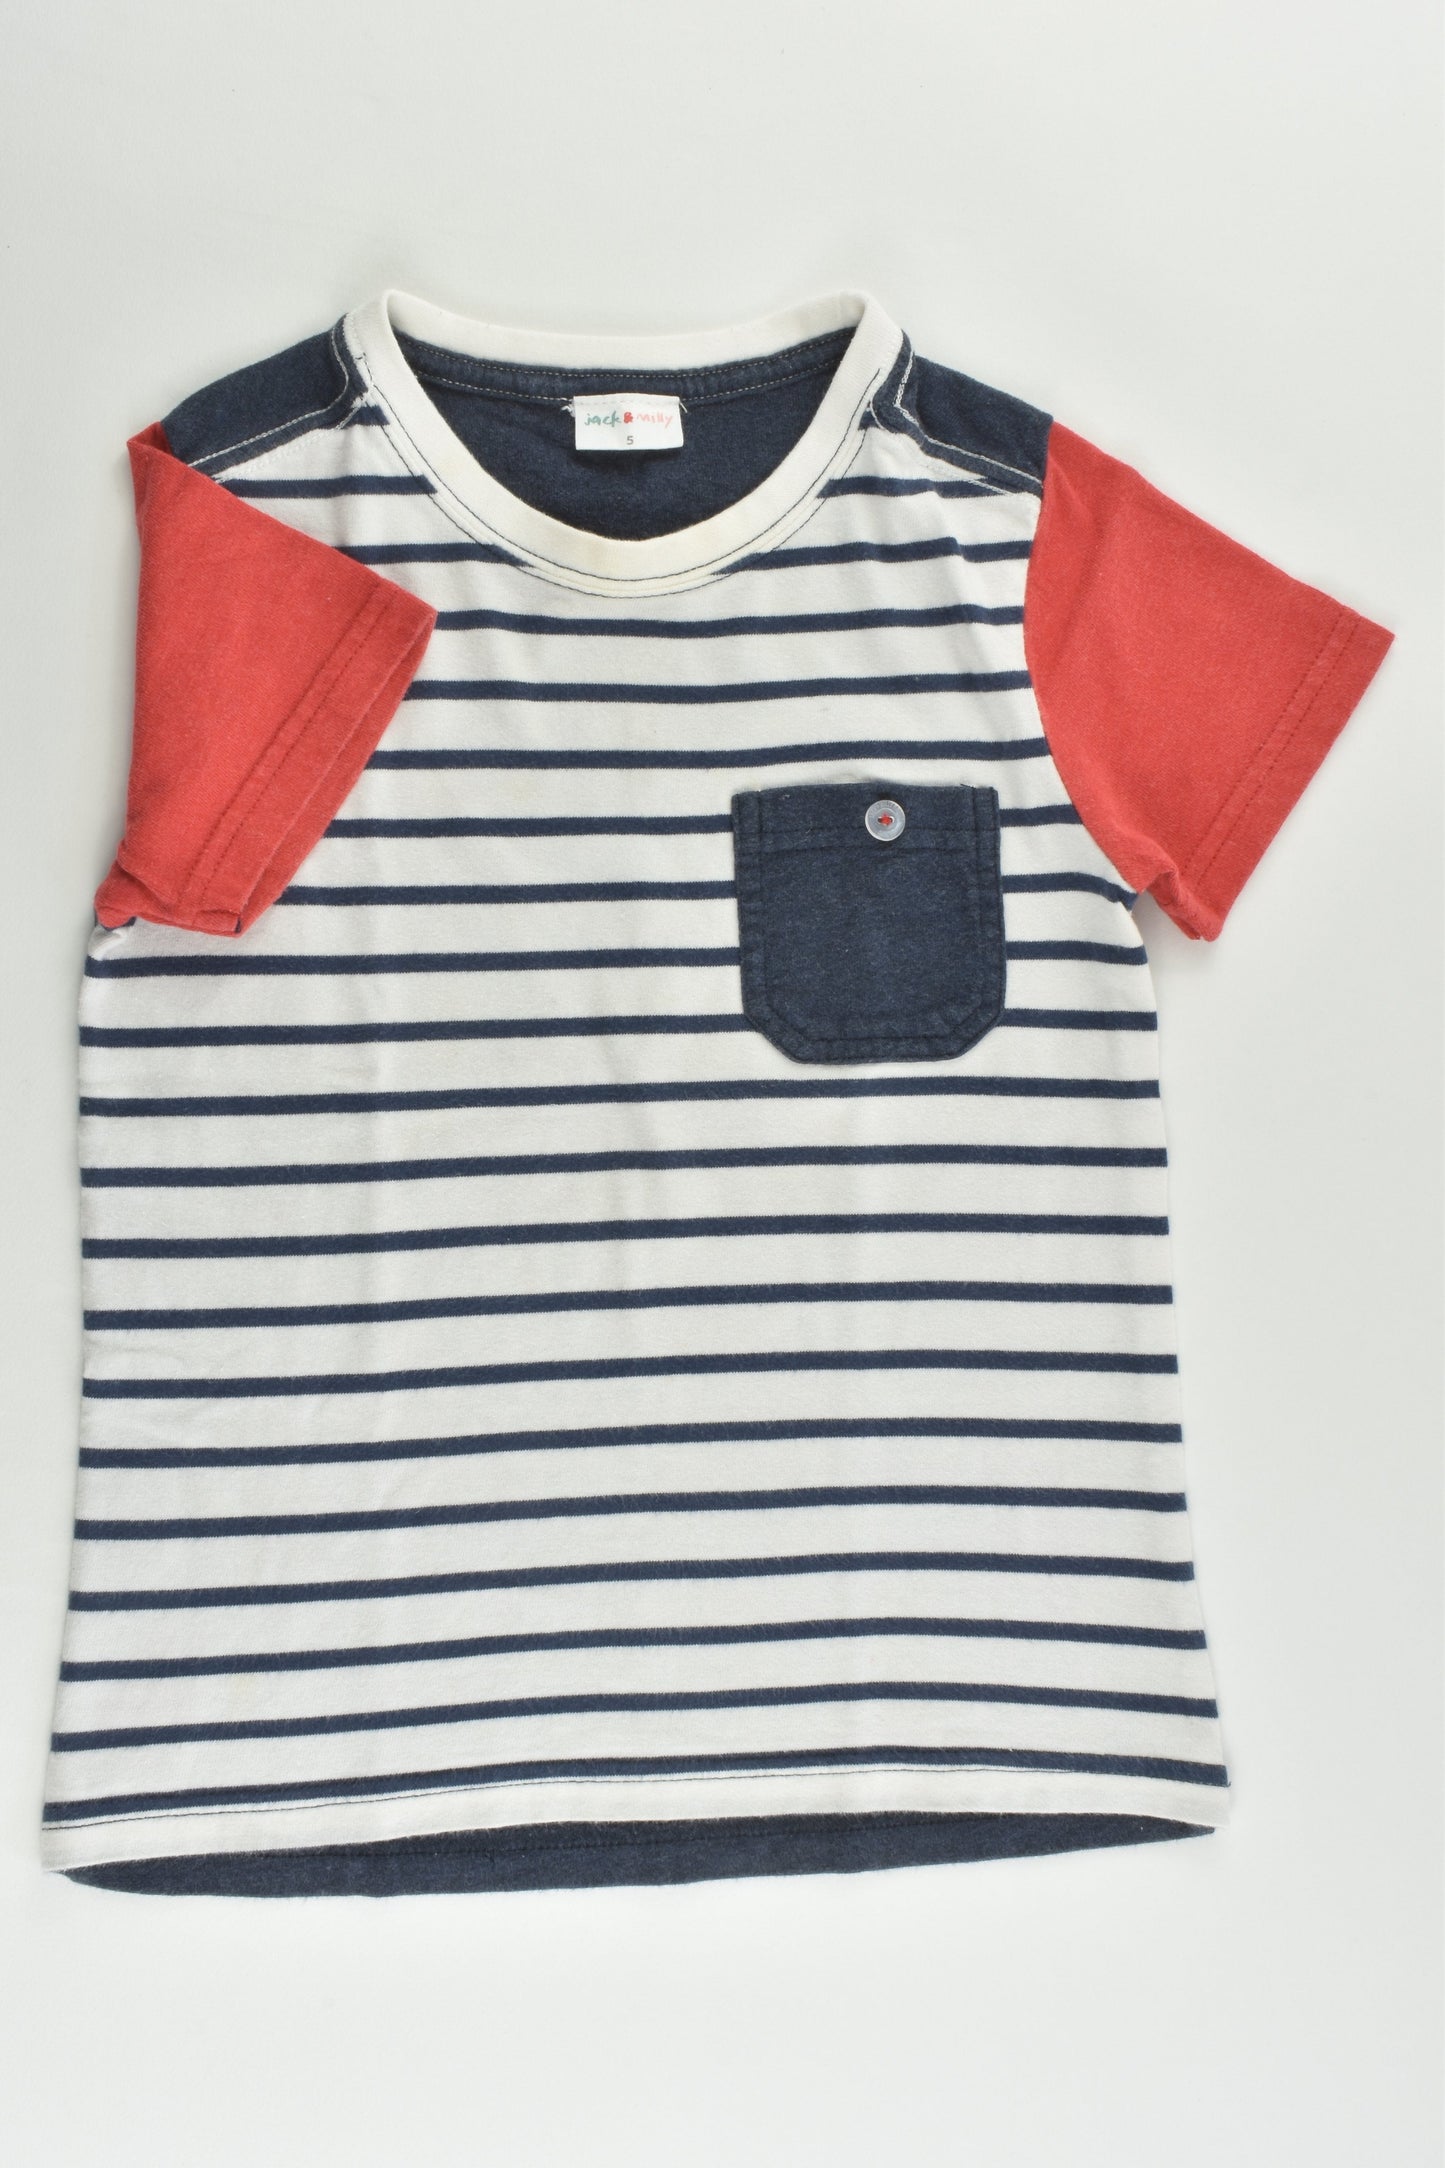 Jack & Milly Size 5 Striped T-shirt